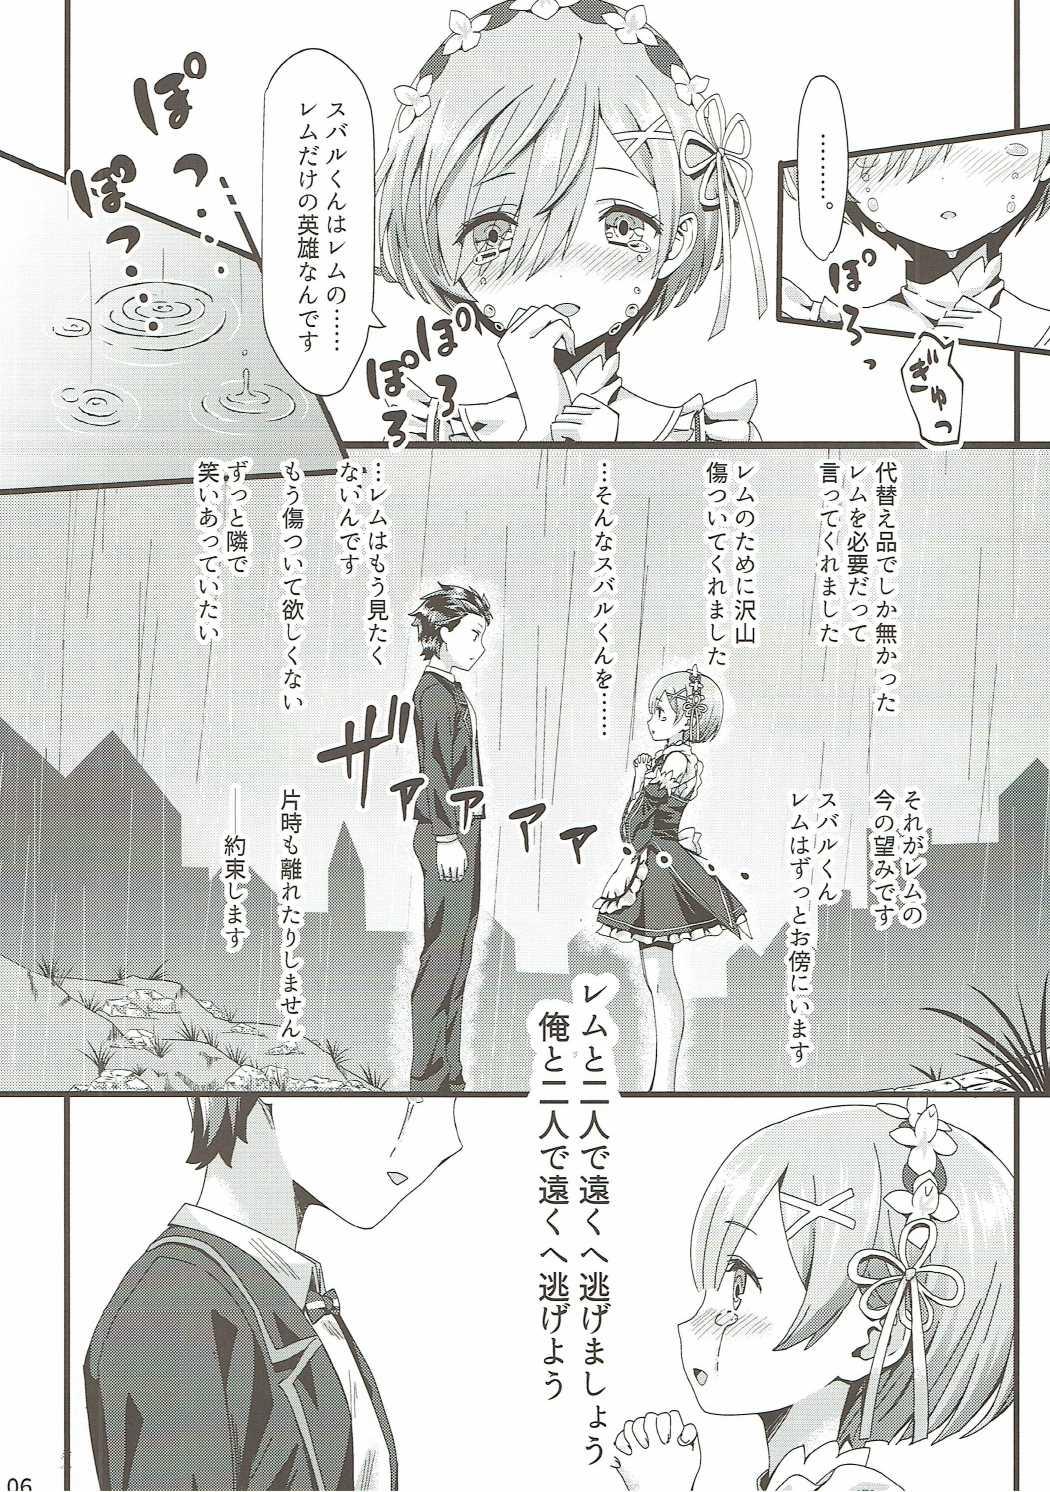 Sucking Dicks Re: Zero Kara Hajimeru Isekai Icha Love Seikatsu - Re zero kara hajimeru isekai seikatsu Parties - Page 5